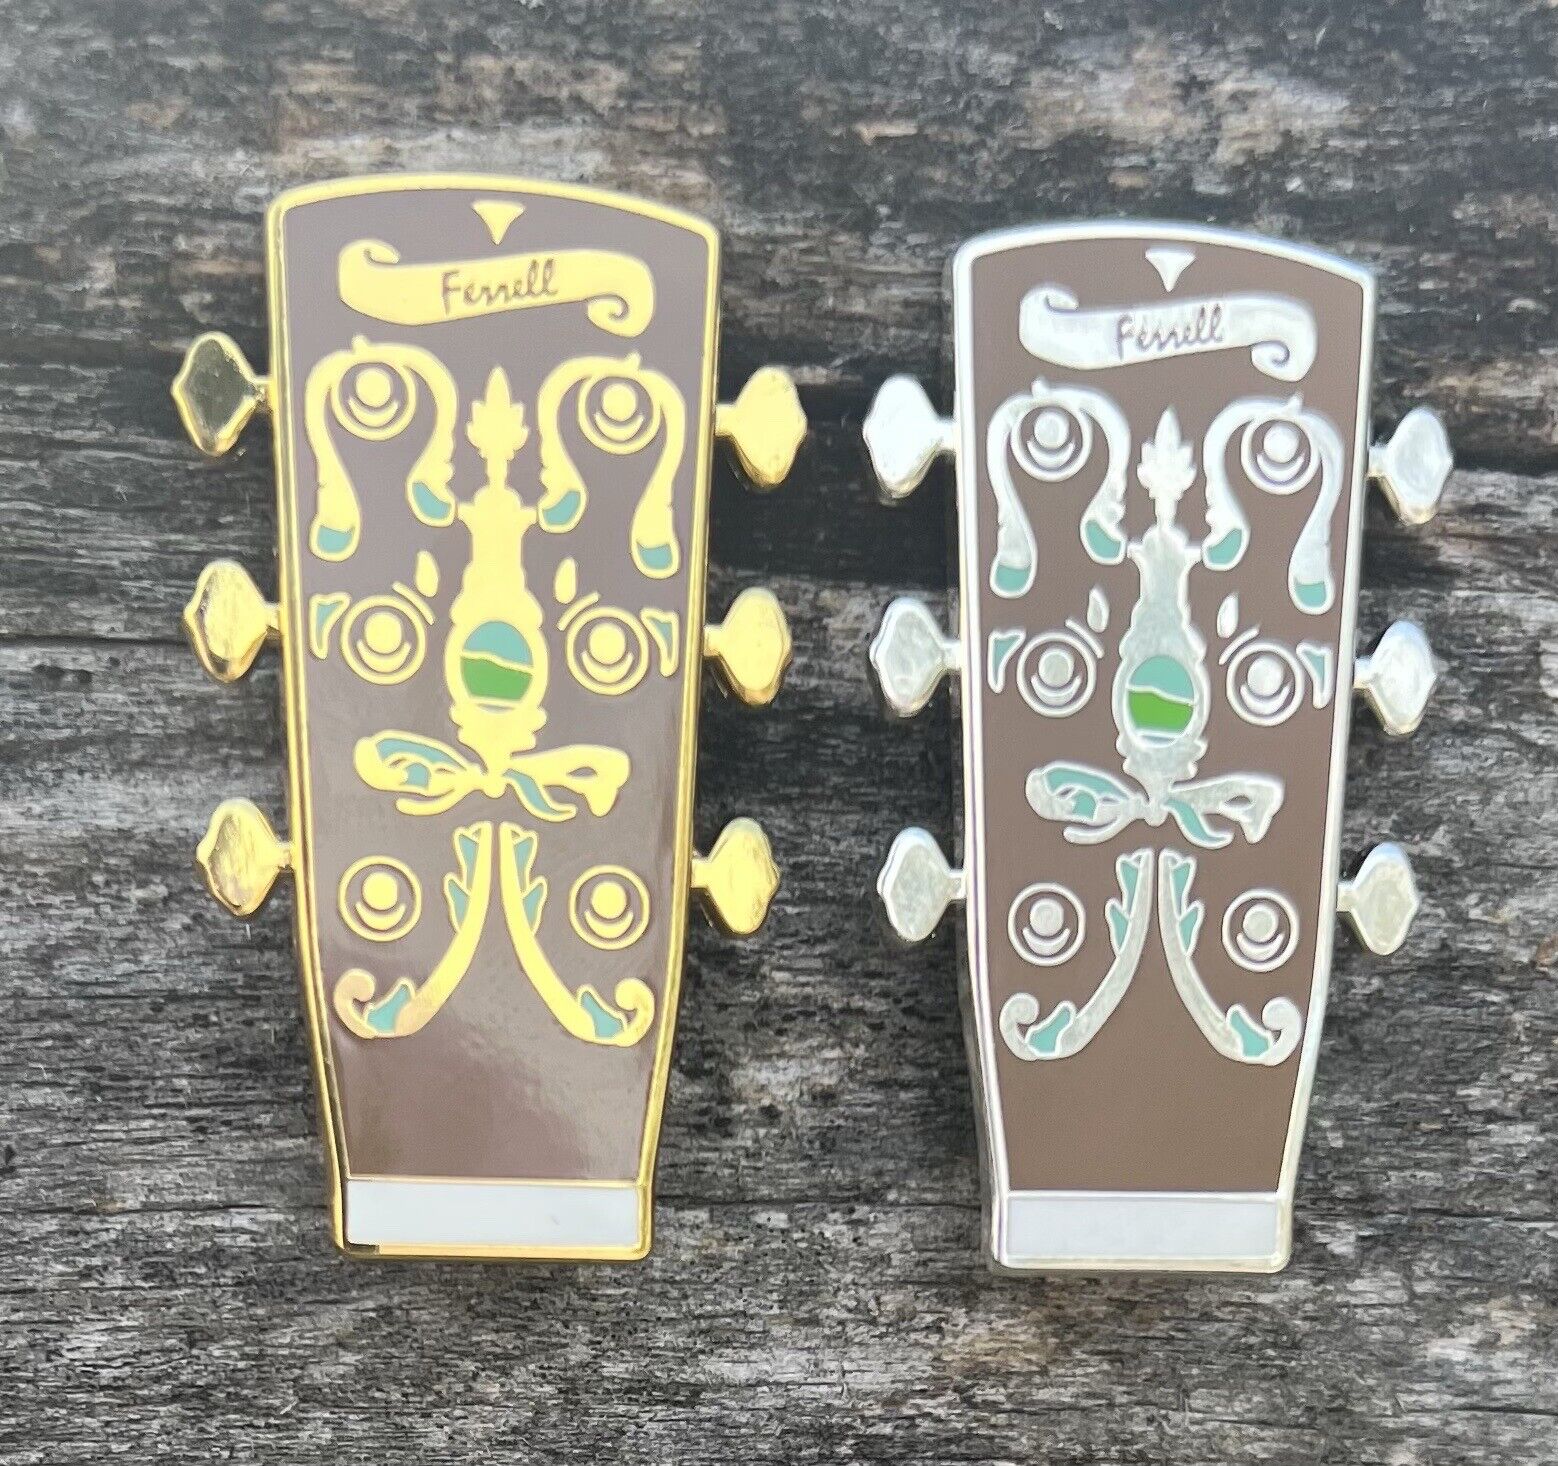 Sierra Ferrell Guitar Headstock Pin Set. 2 Pins